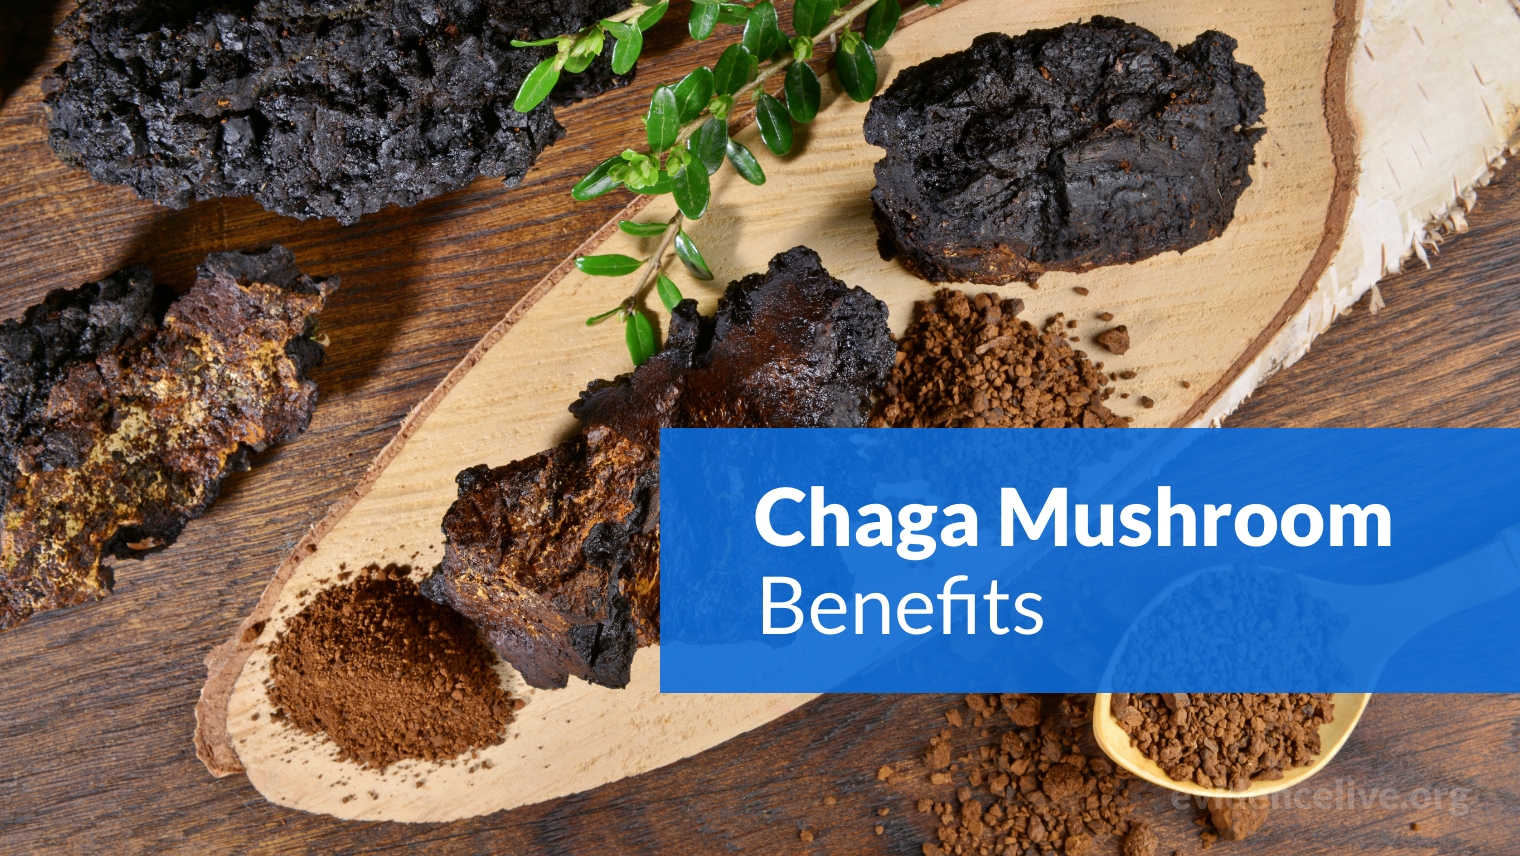 Chaga Mushroom: Benefits, Uses, Dosage, and Side Effects